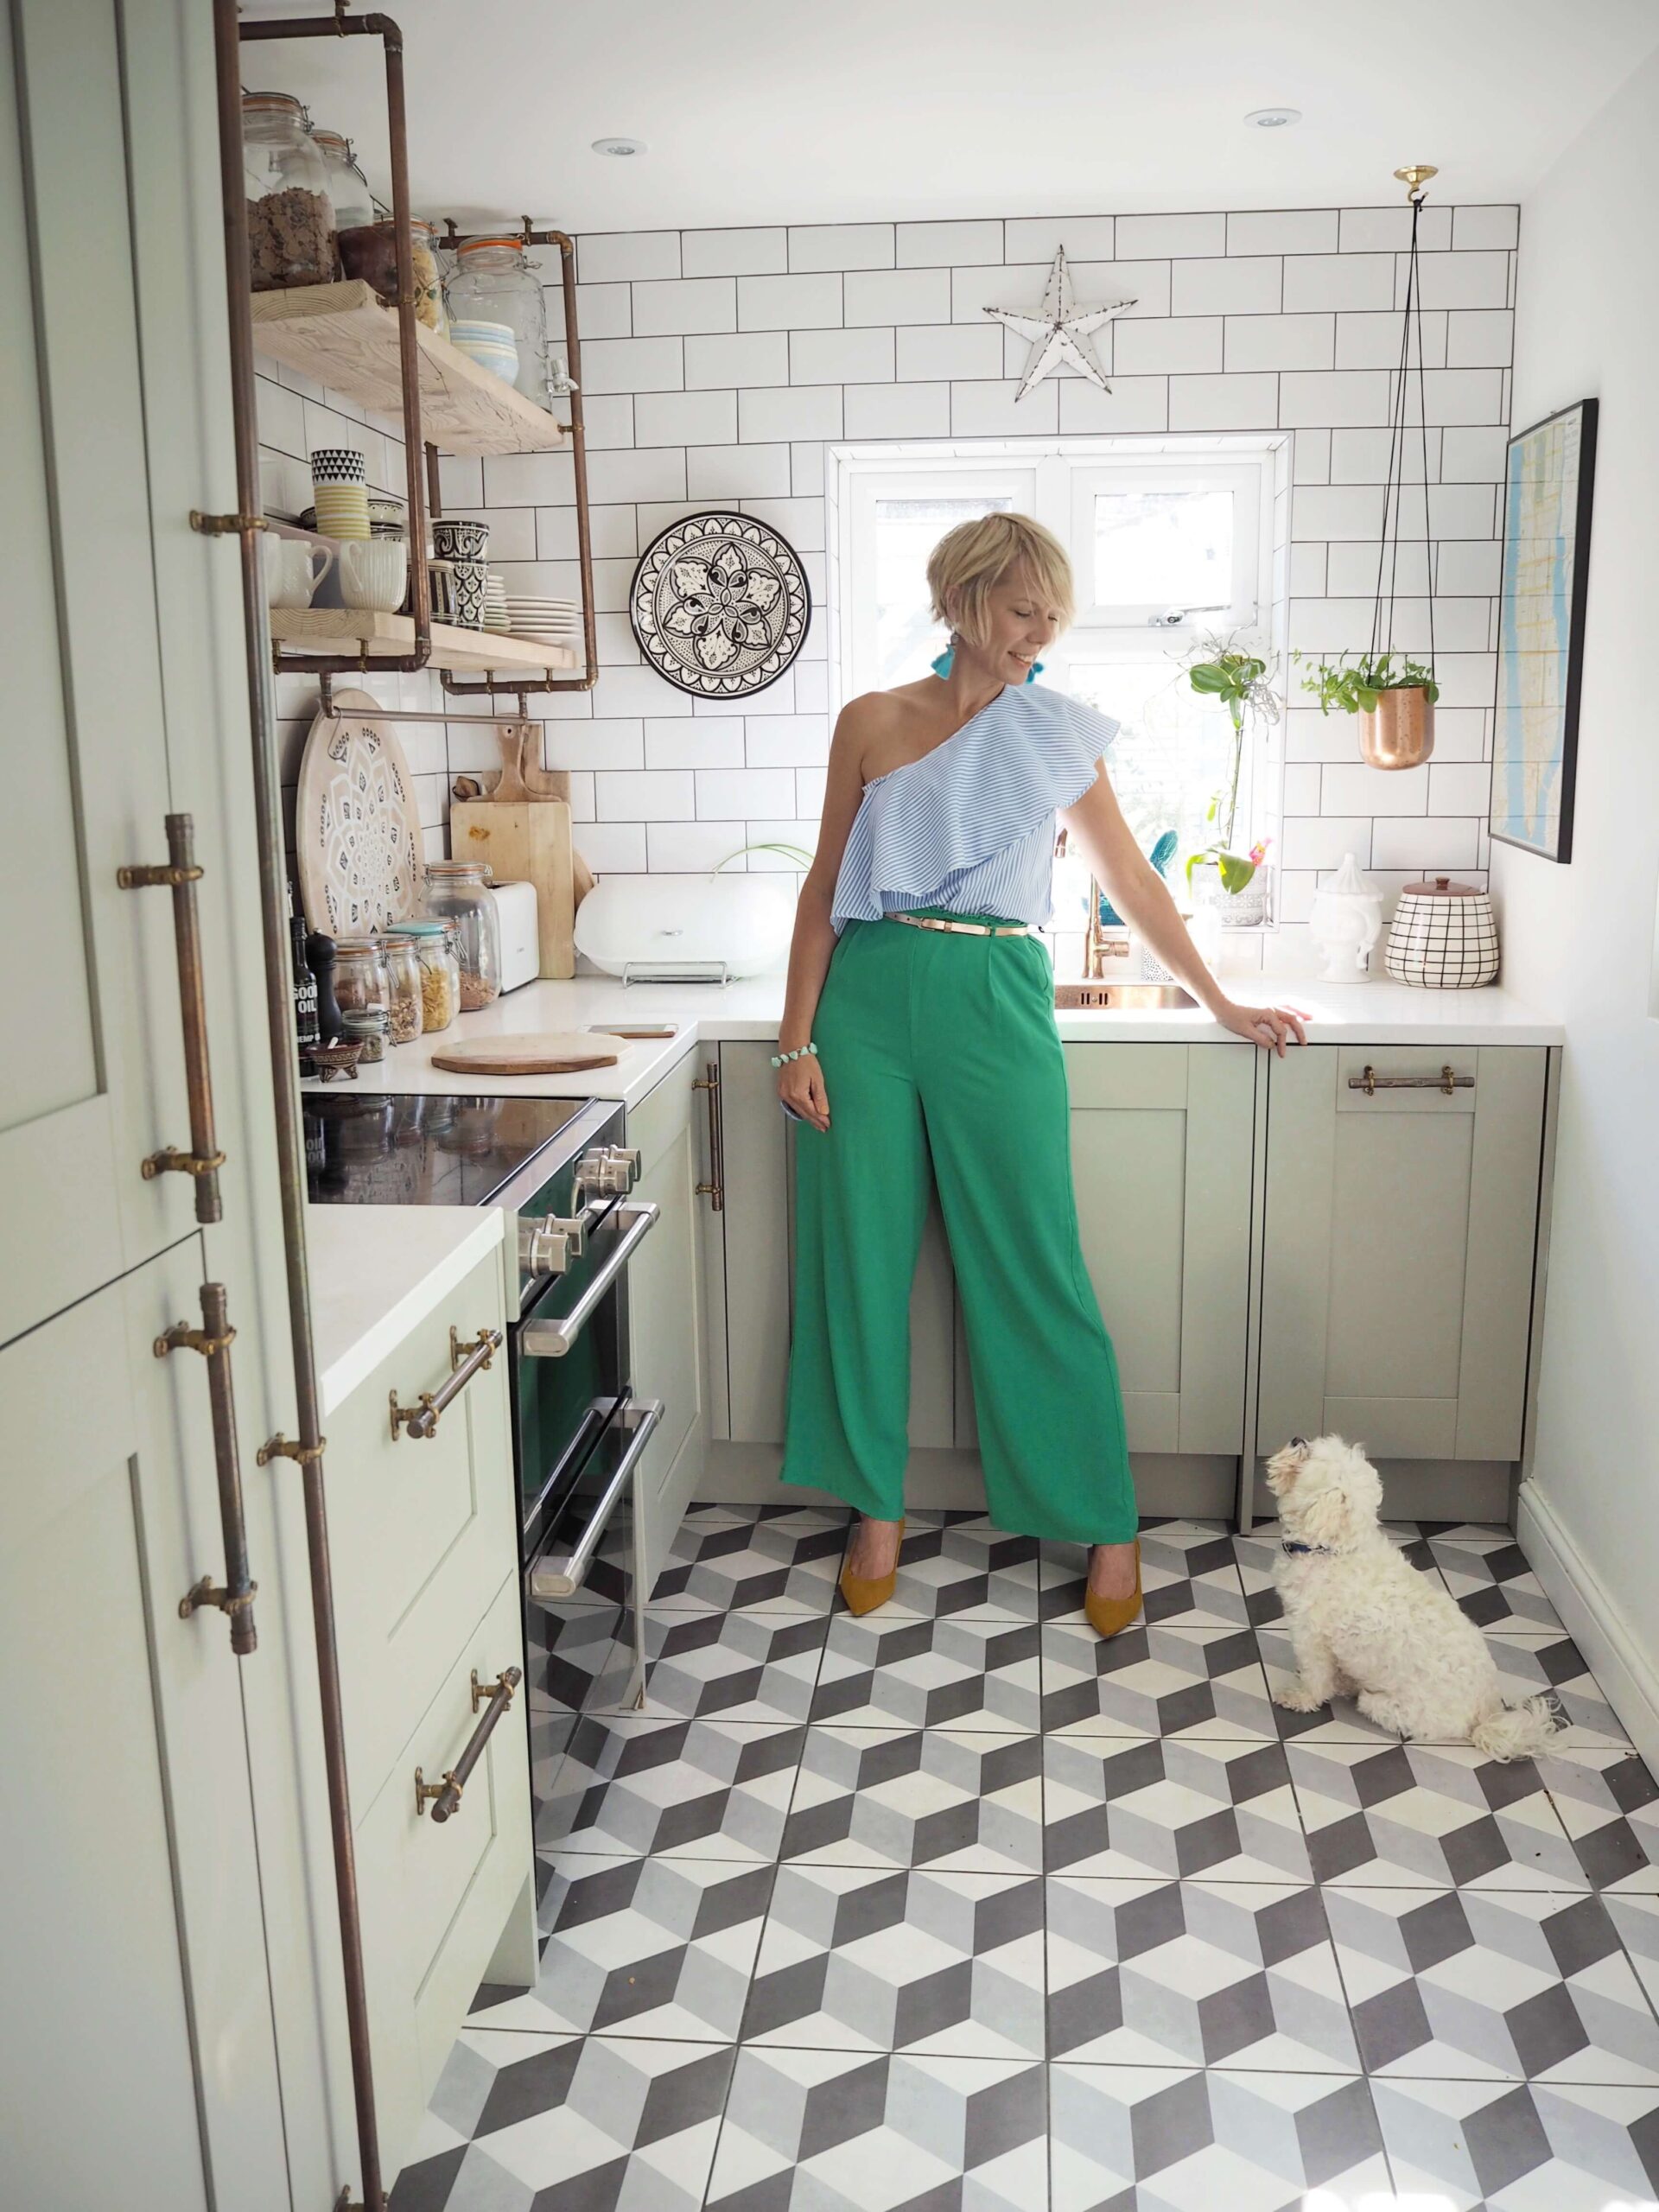 6 Cool Design Tips For Small Kitchens  Maxine Brady  Interior  - tiny kitchens ideas